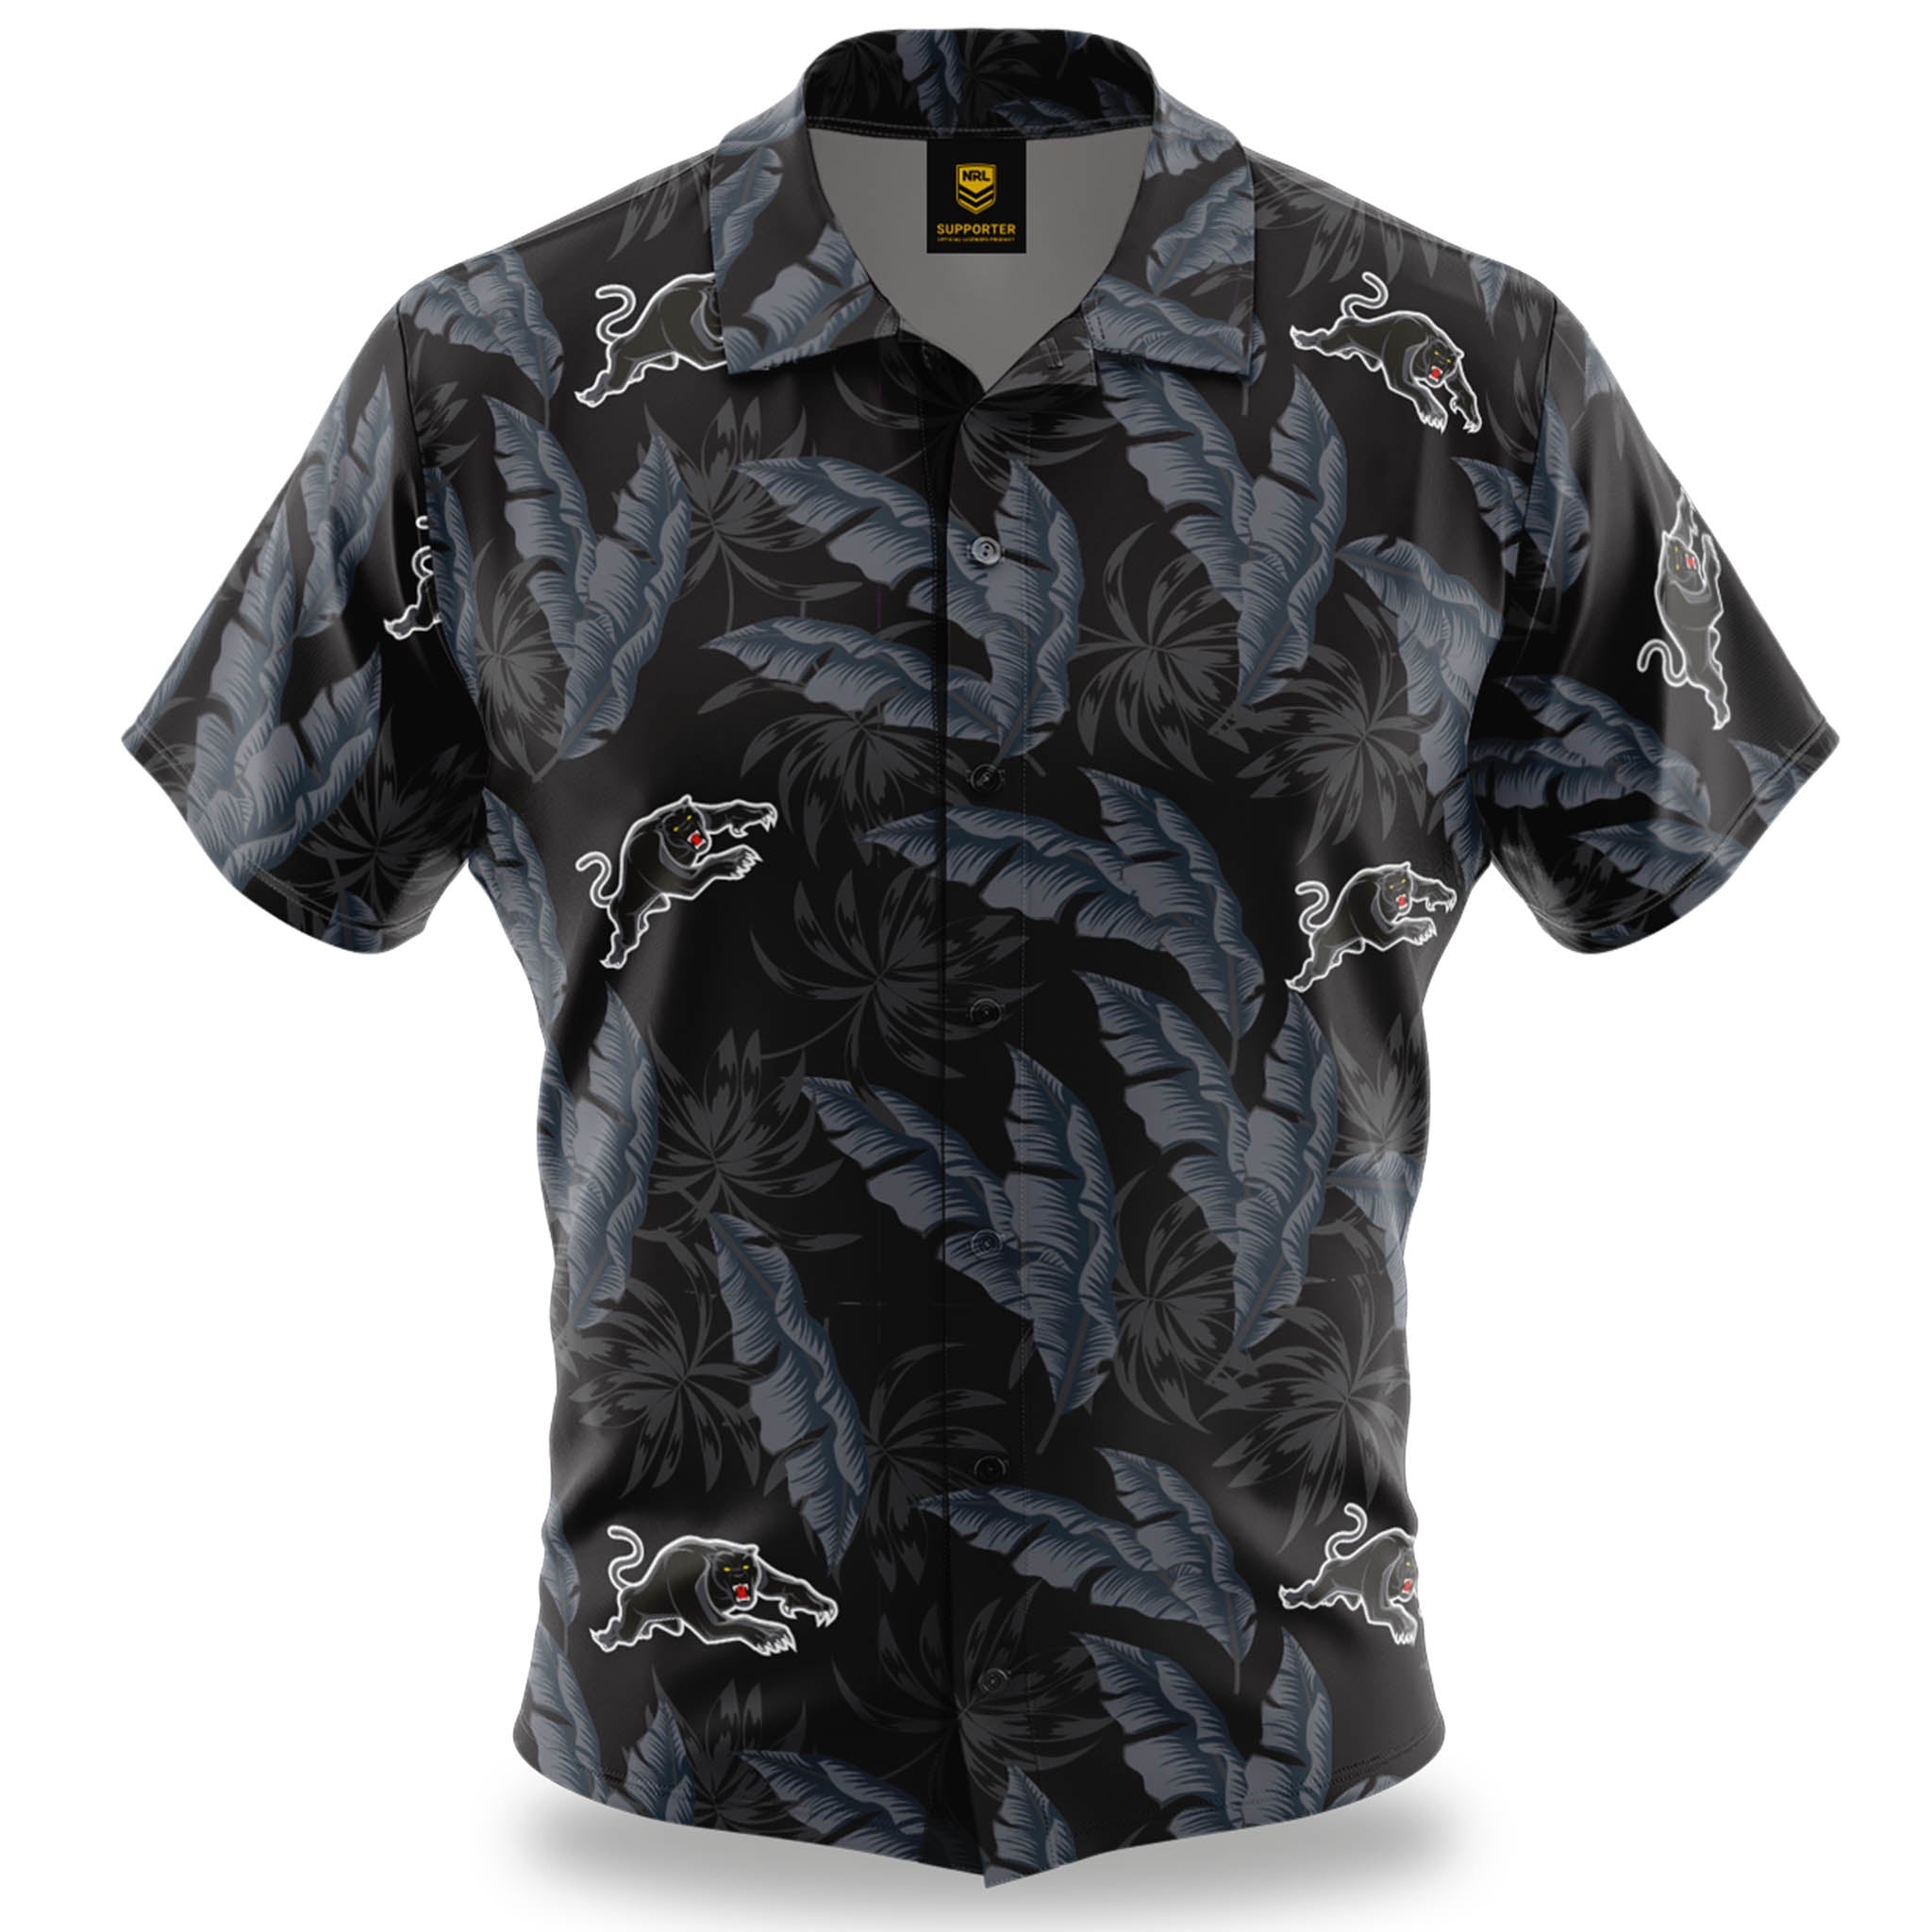 Panthers Paradise Hawaiian Shirt - The Rugby Shop Darwin